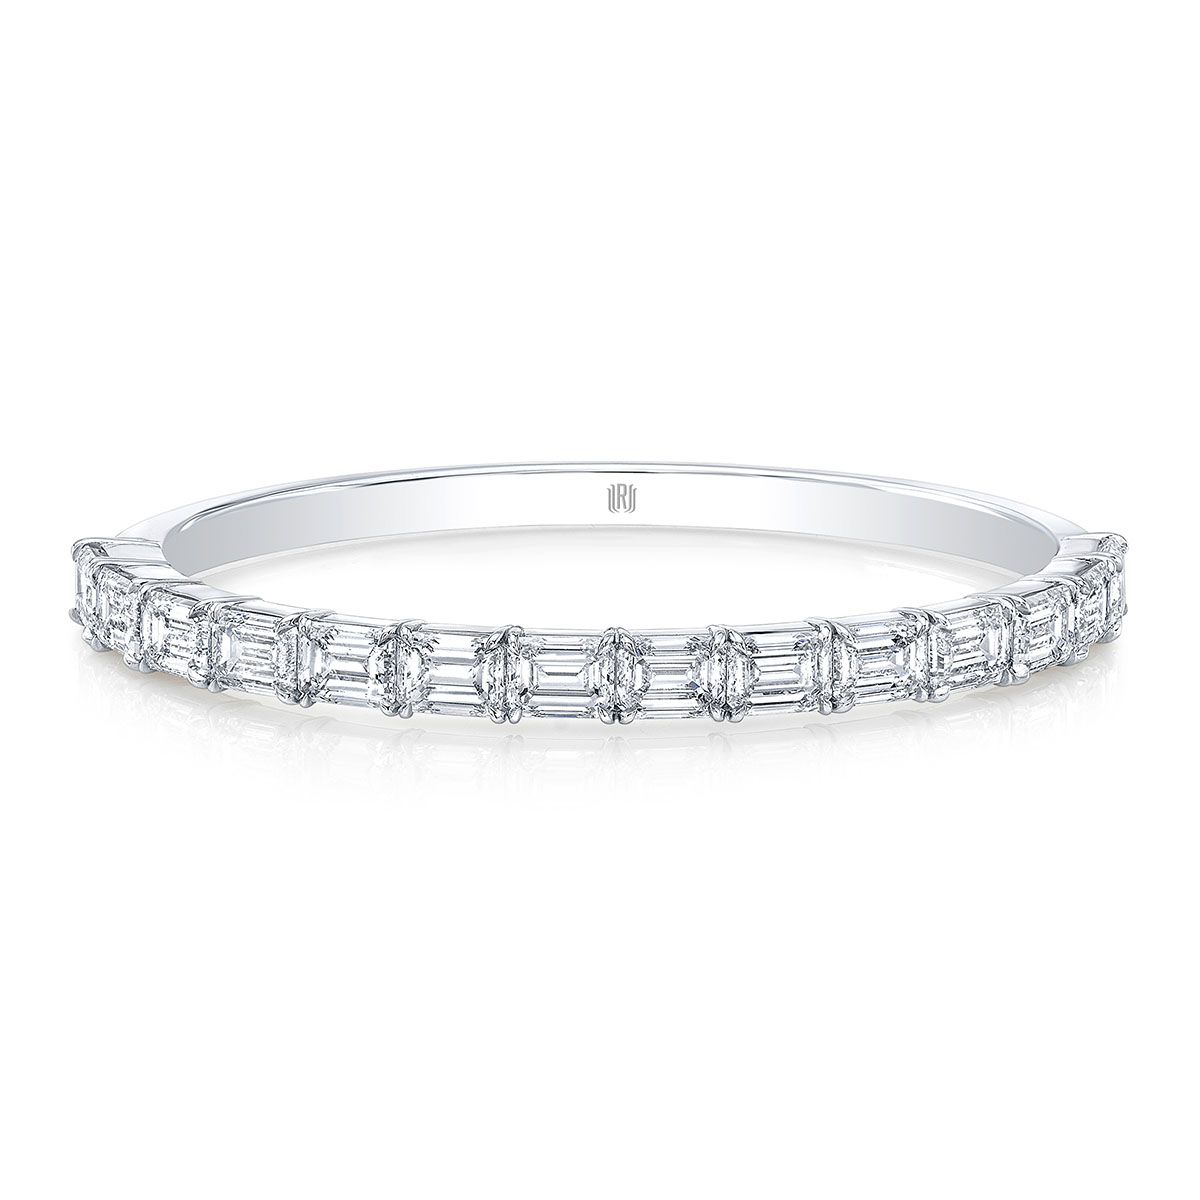 18K White Gold Emerald Cut Diamond Bangle Bracelet | Borsheims